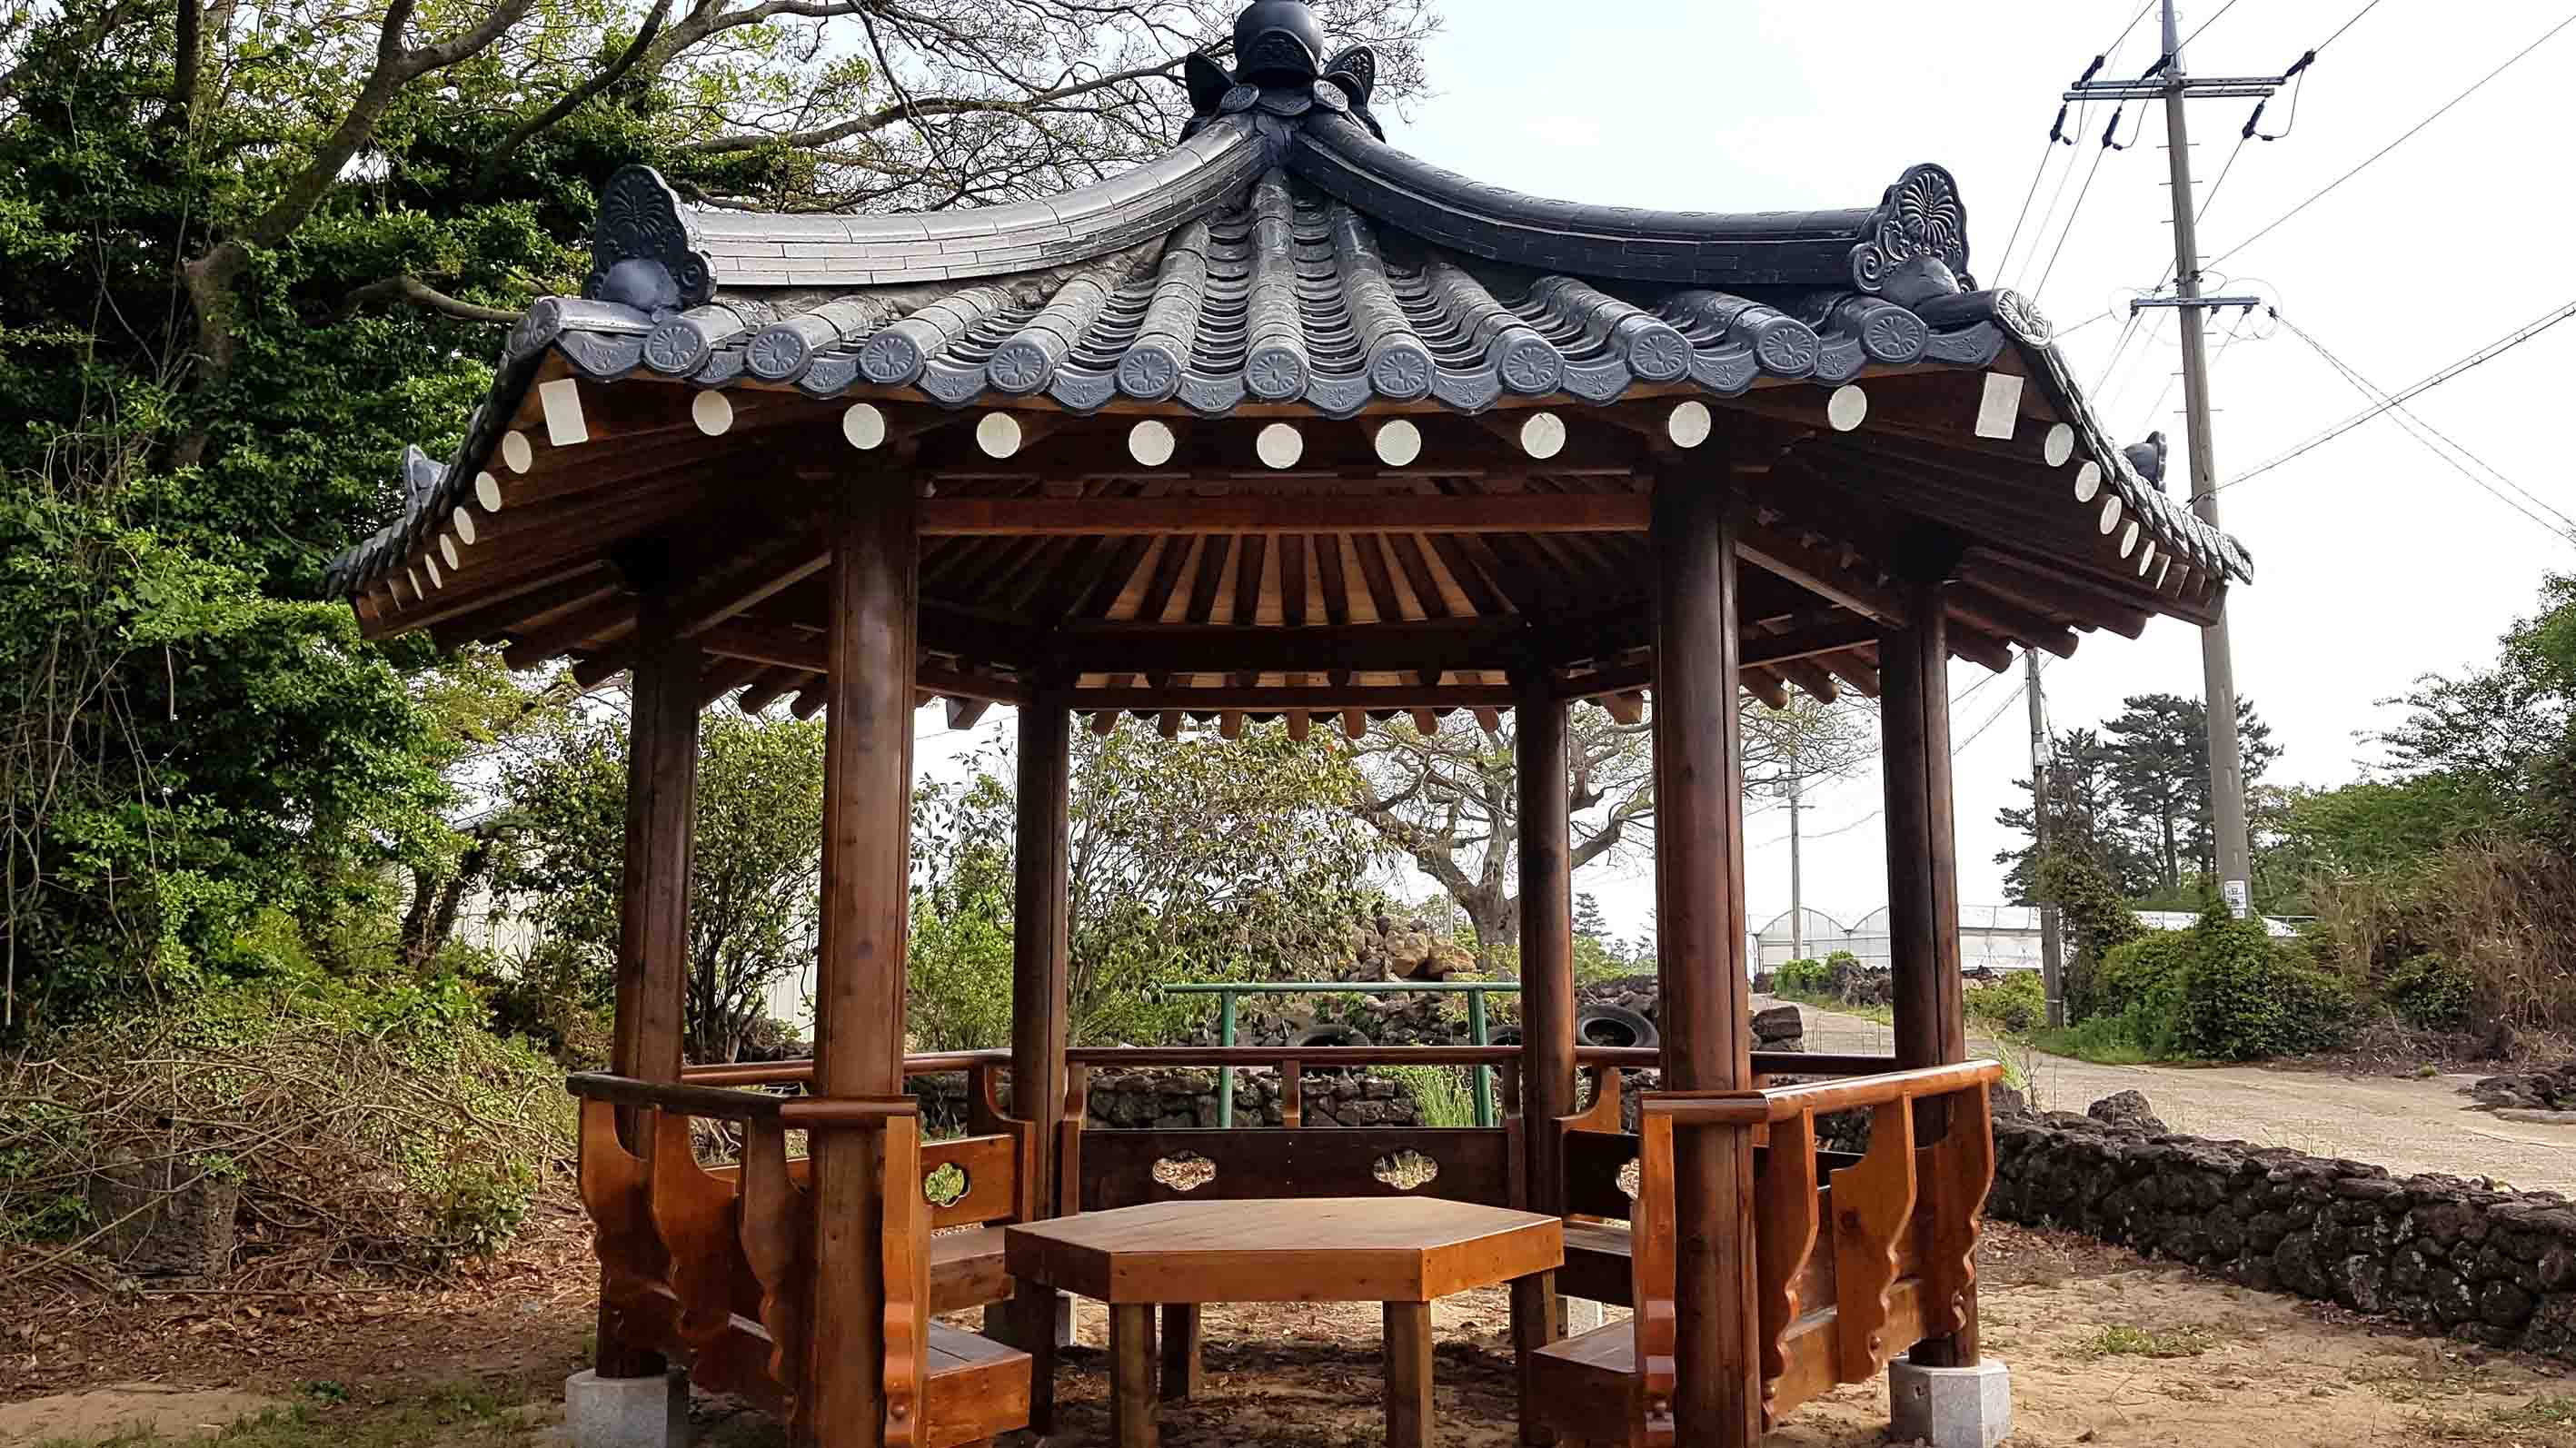 Pavilion to form centrepiece of Korean garden